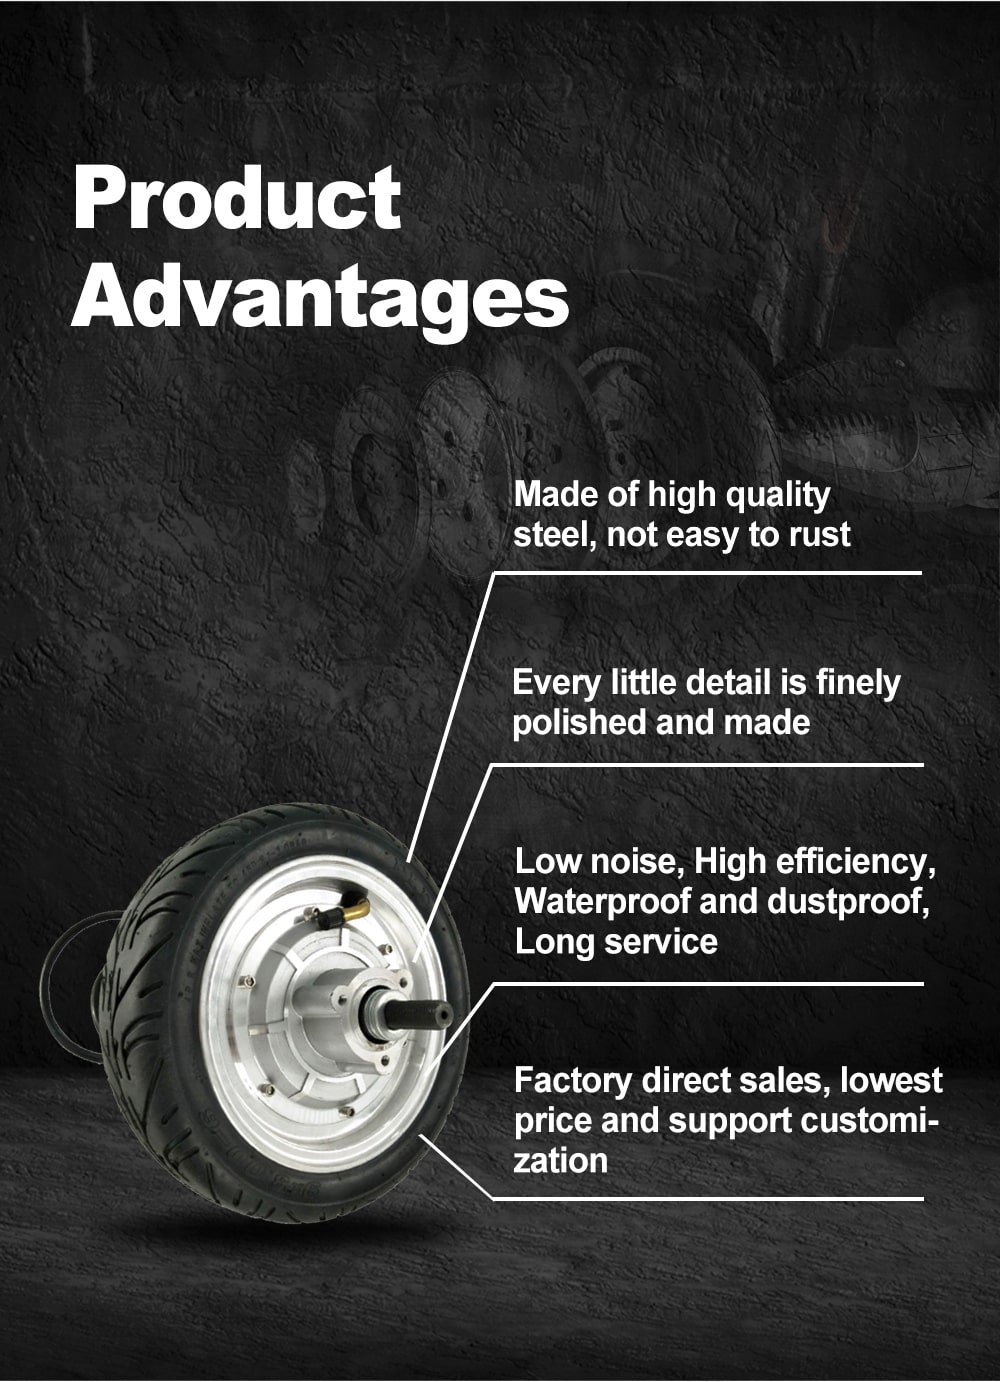 9 inch gearless hub motor advantages